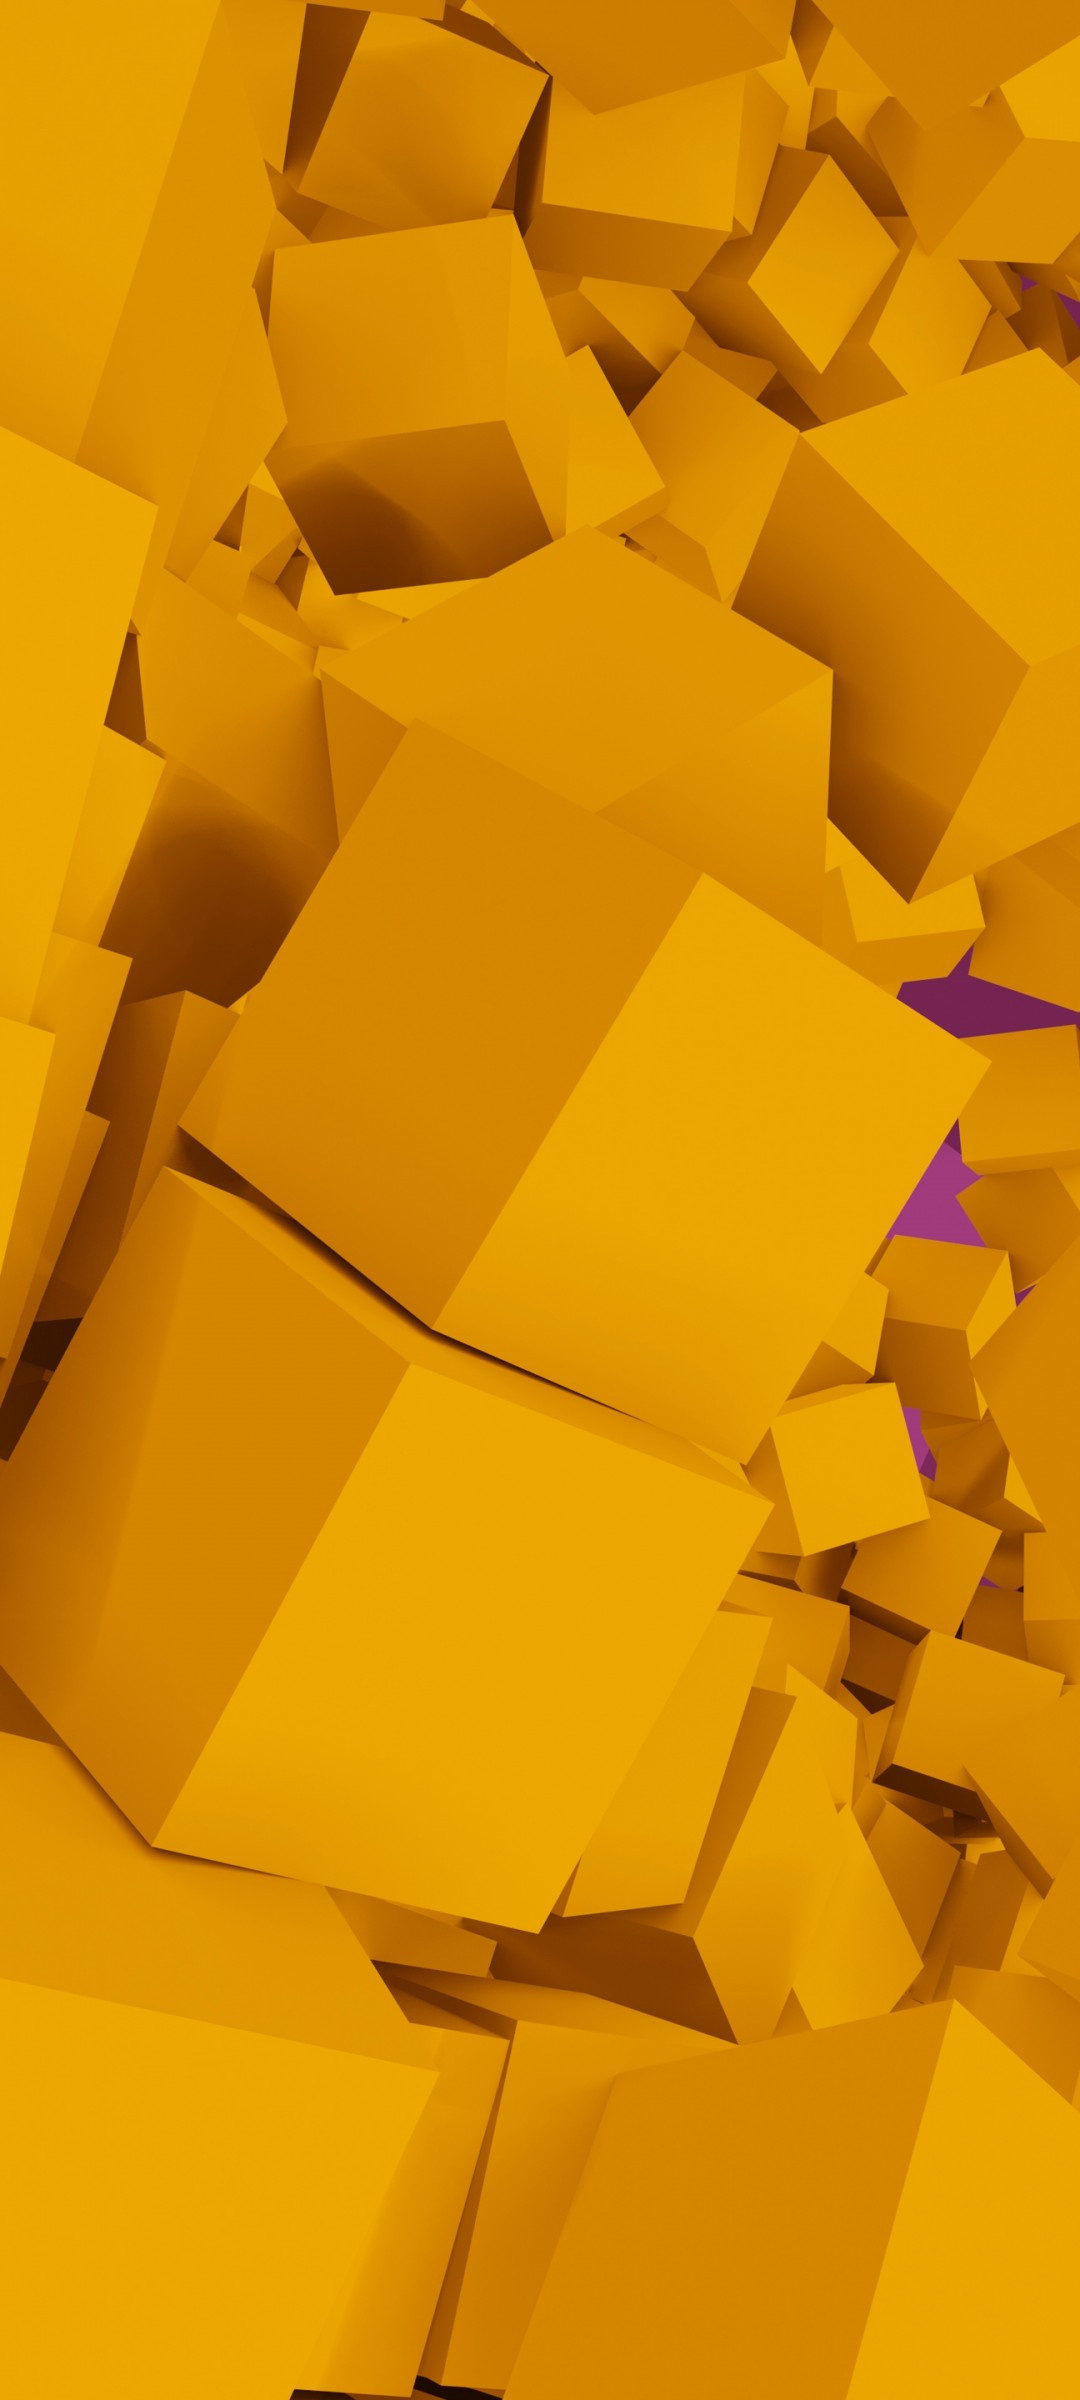 3D objects wallpaper, Yellow cubes design, Geometric shapes inspiration, Technology theme, 1080x2400 HD Handy